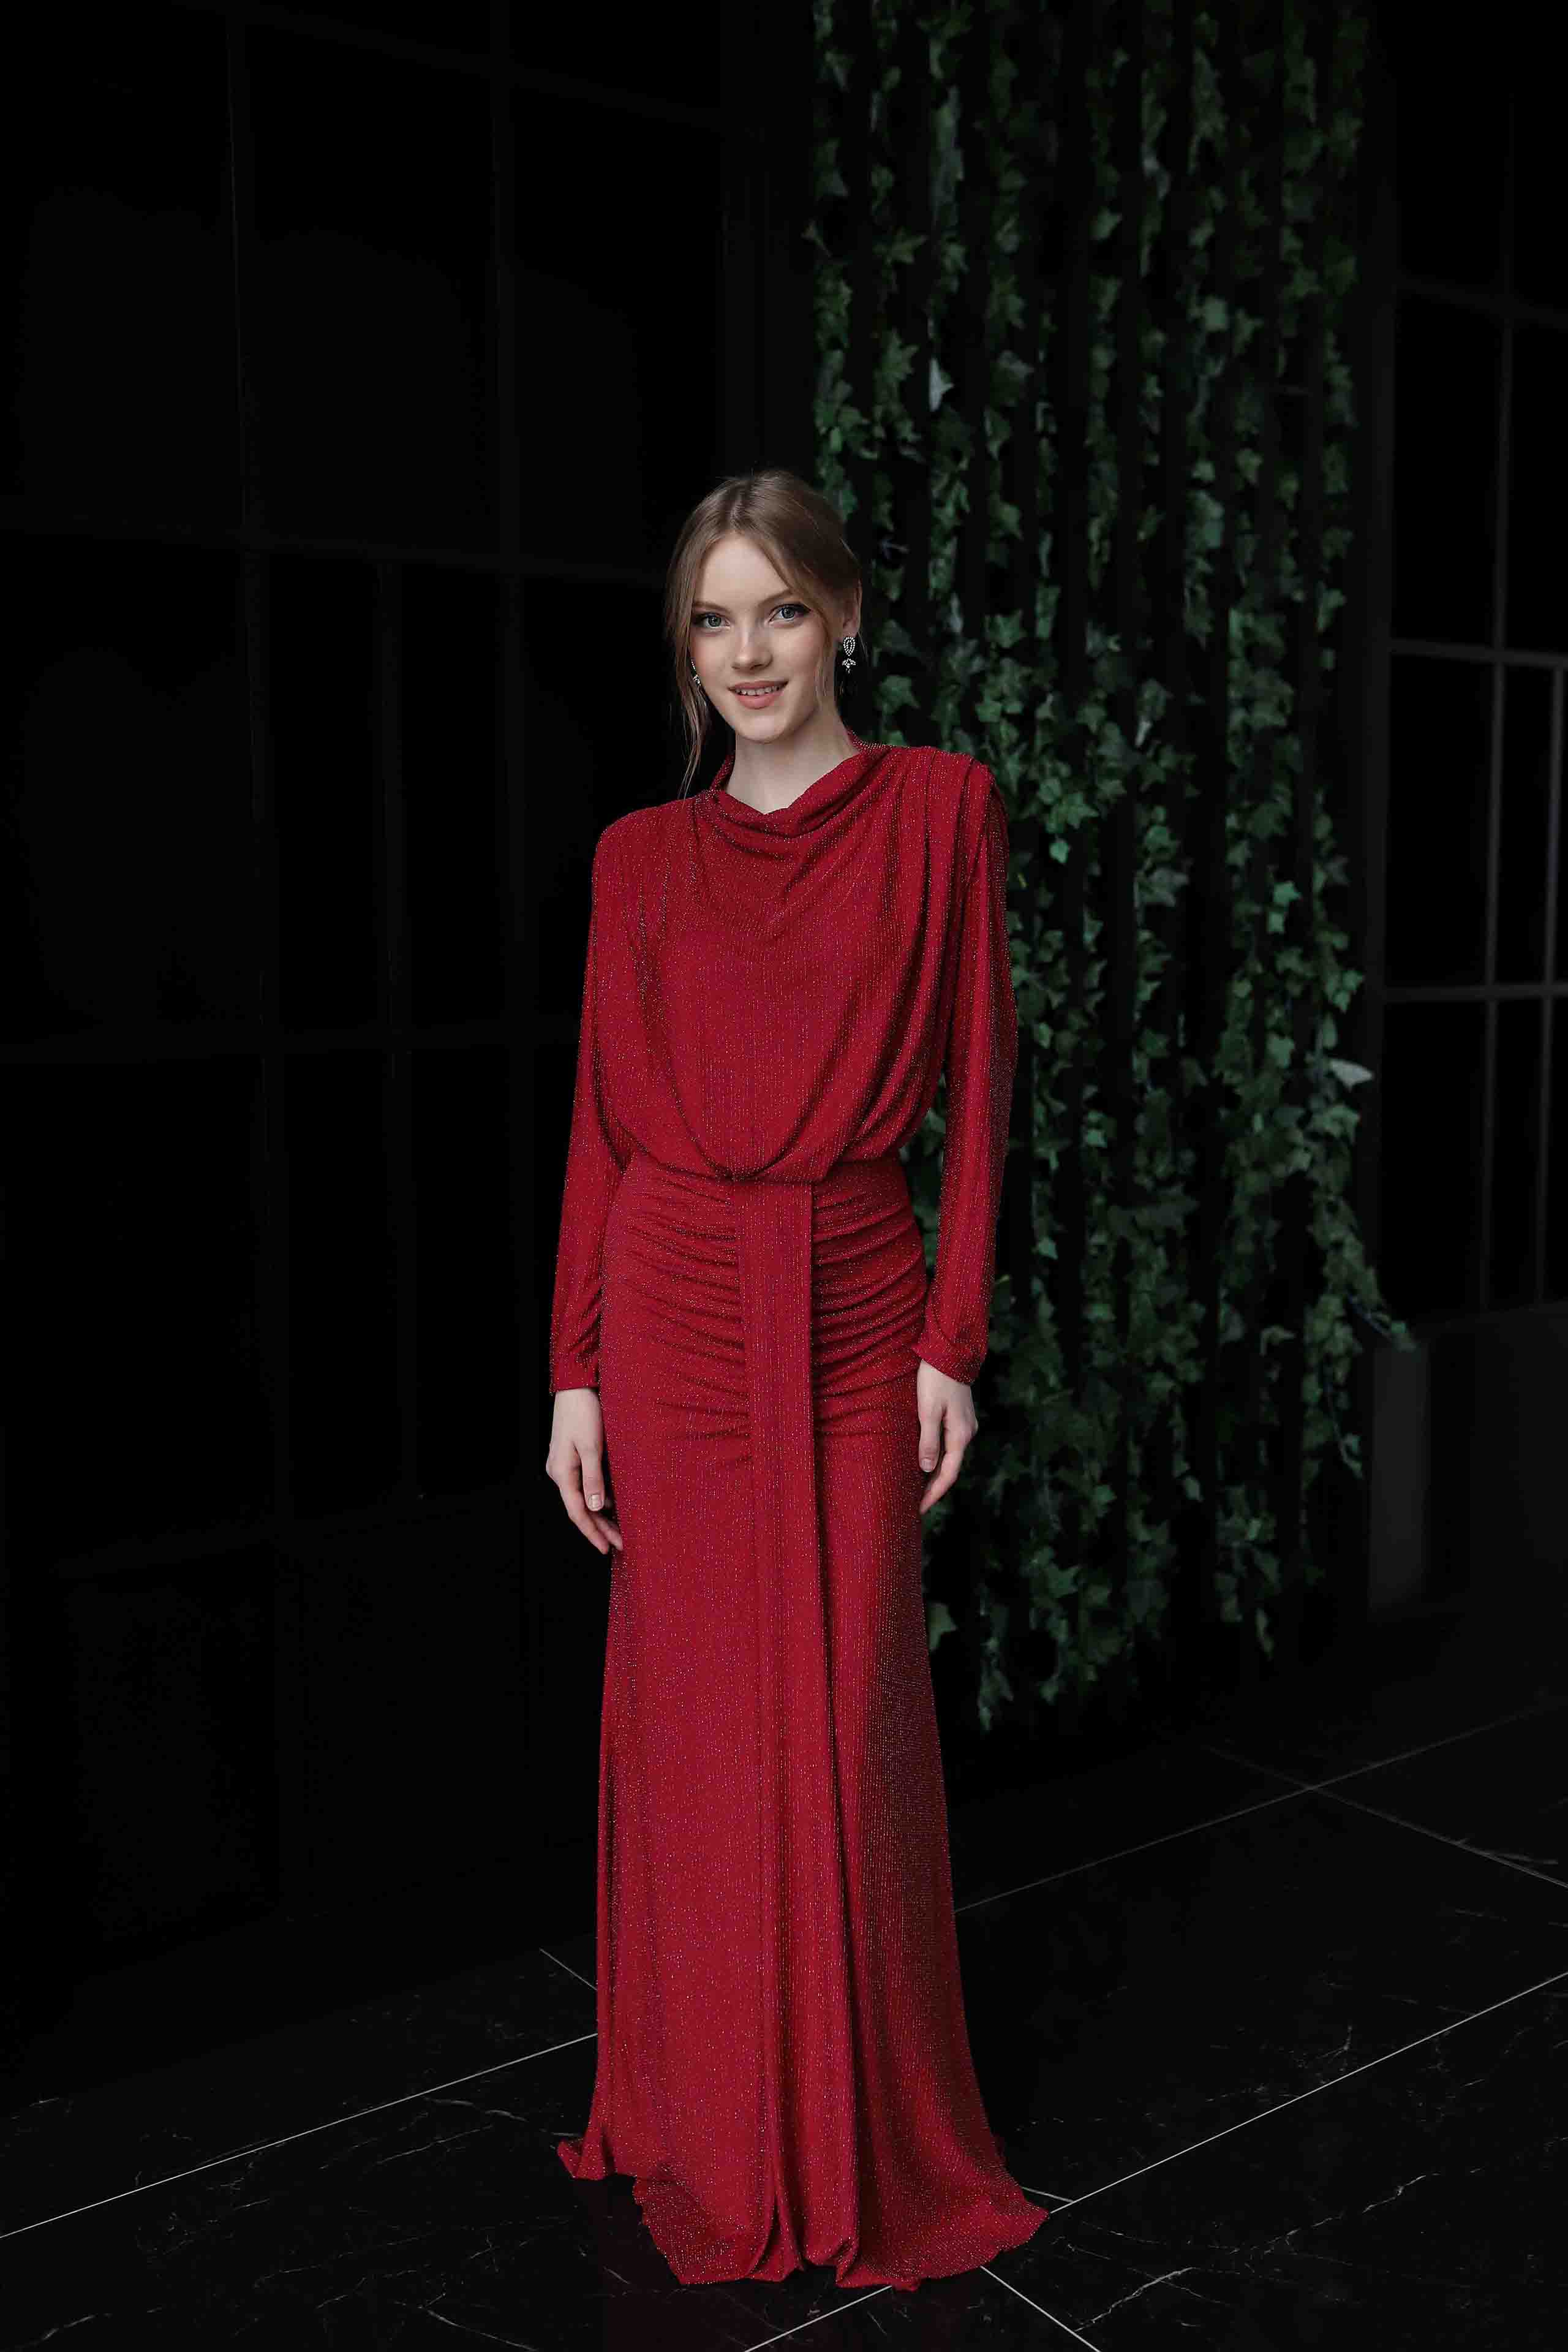 Claret Red Evening Dress